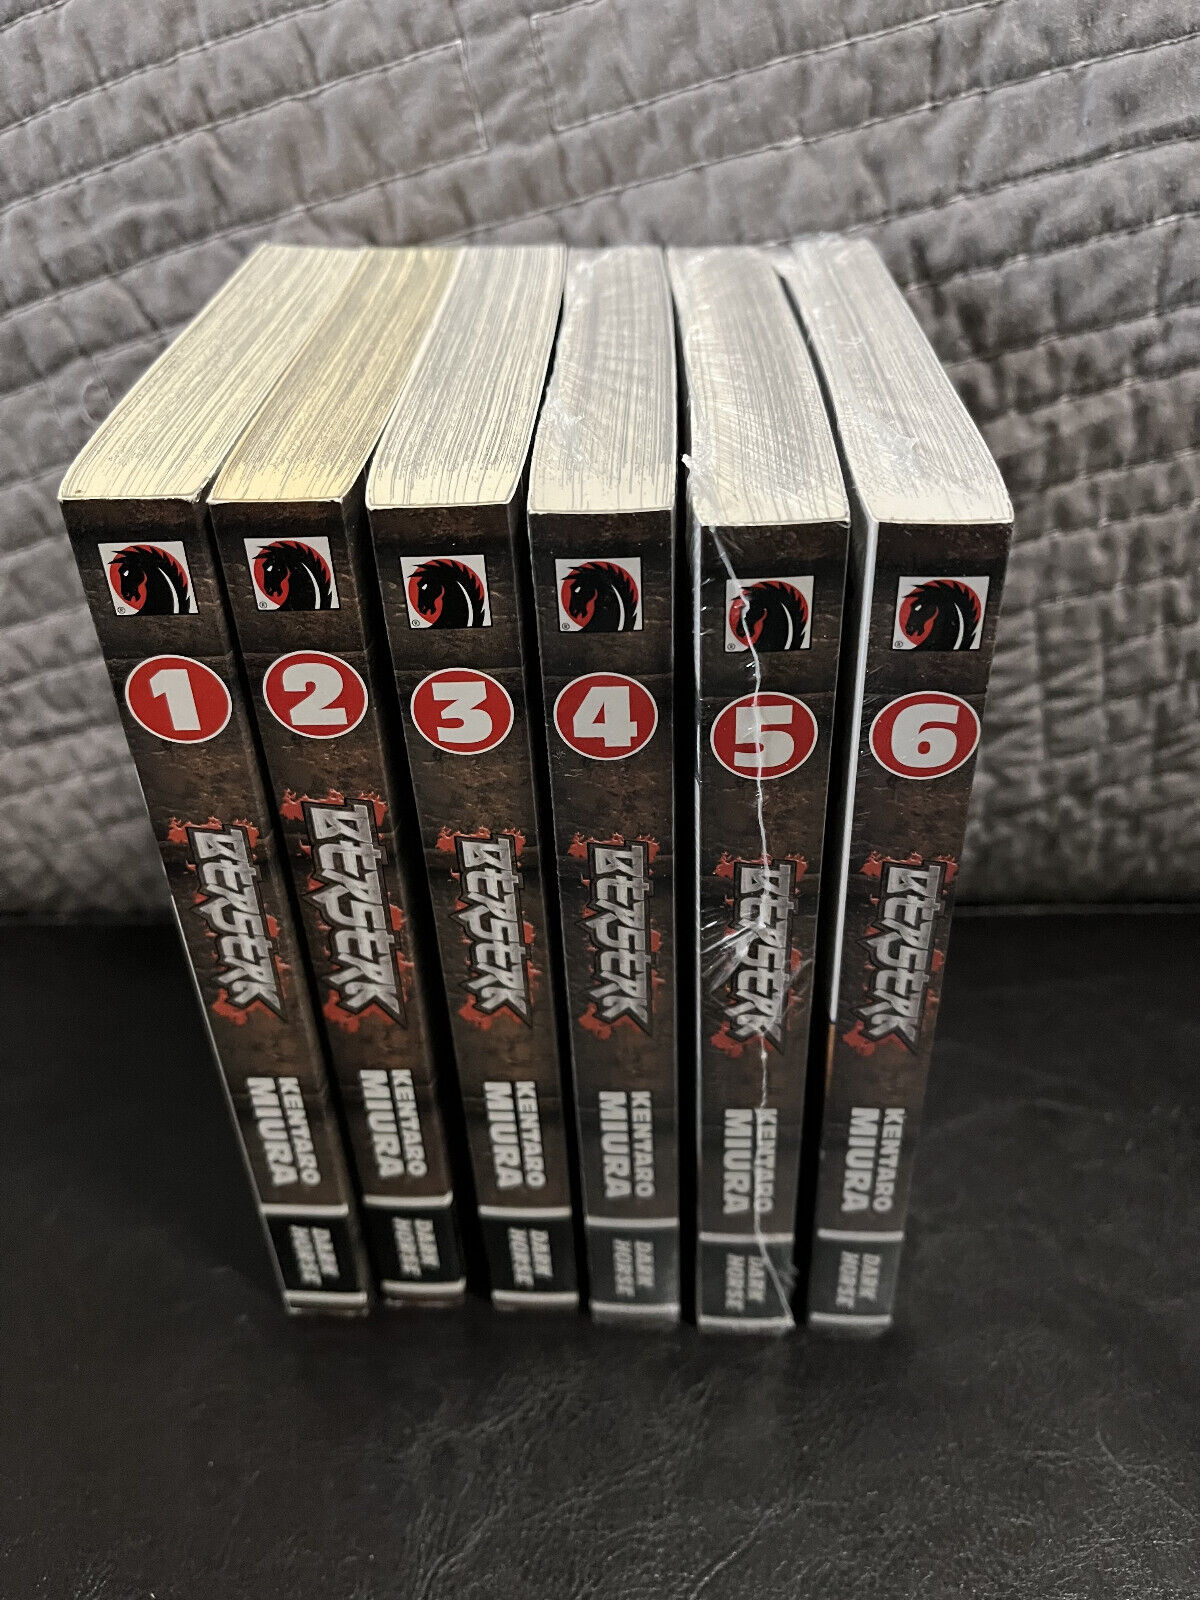 Berserk Manga | Volumes 1-6 | Great condition or unopened | English